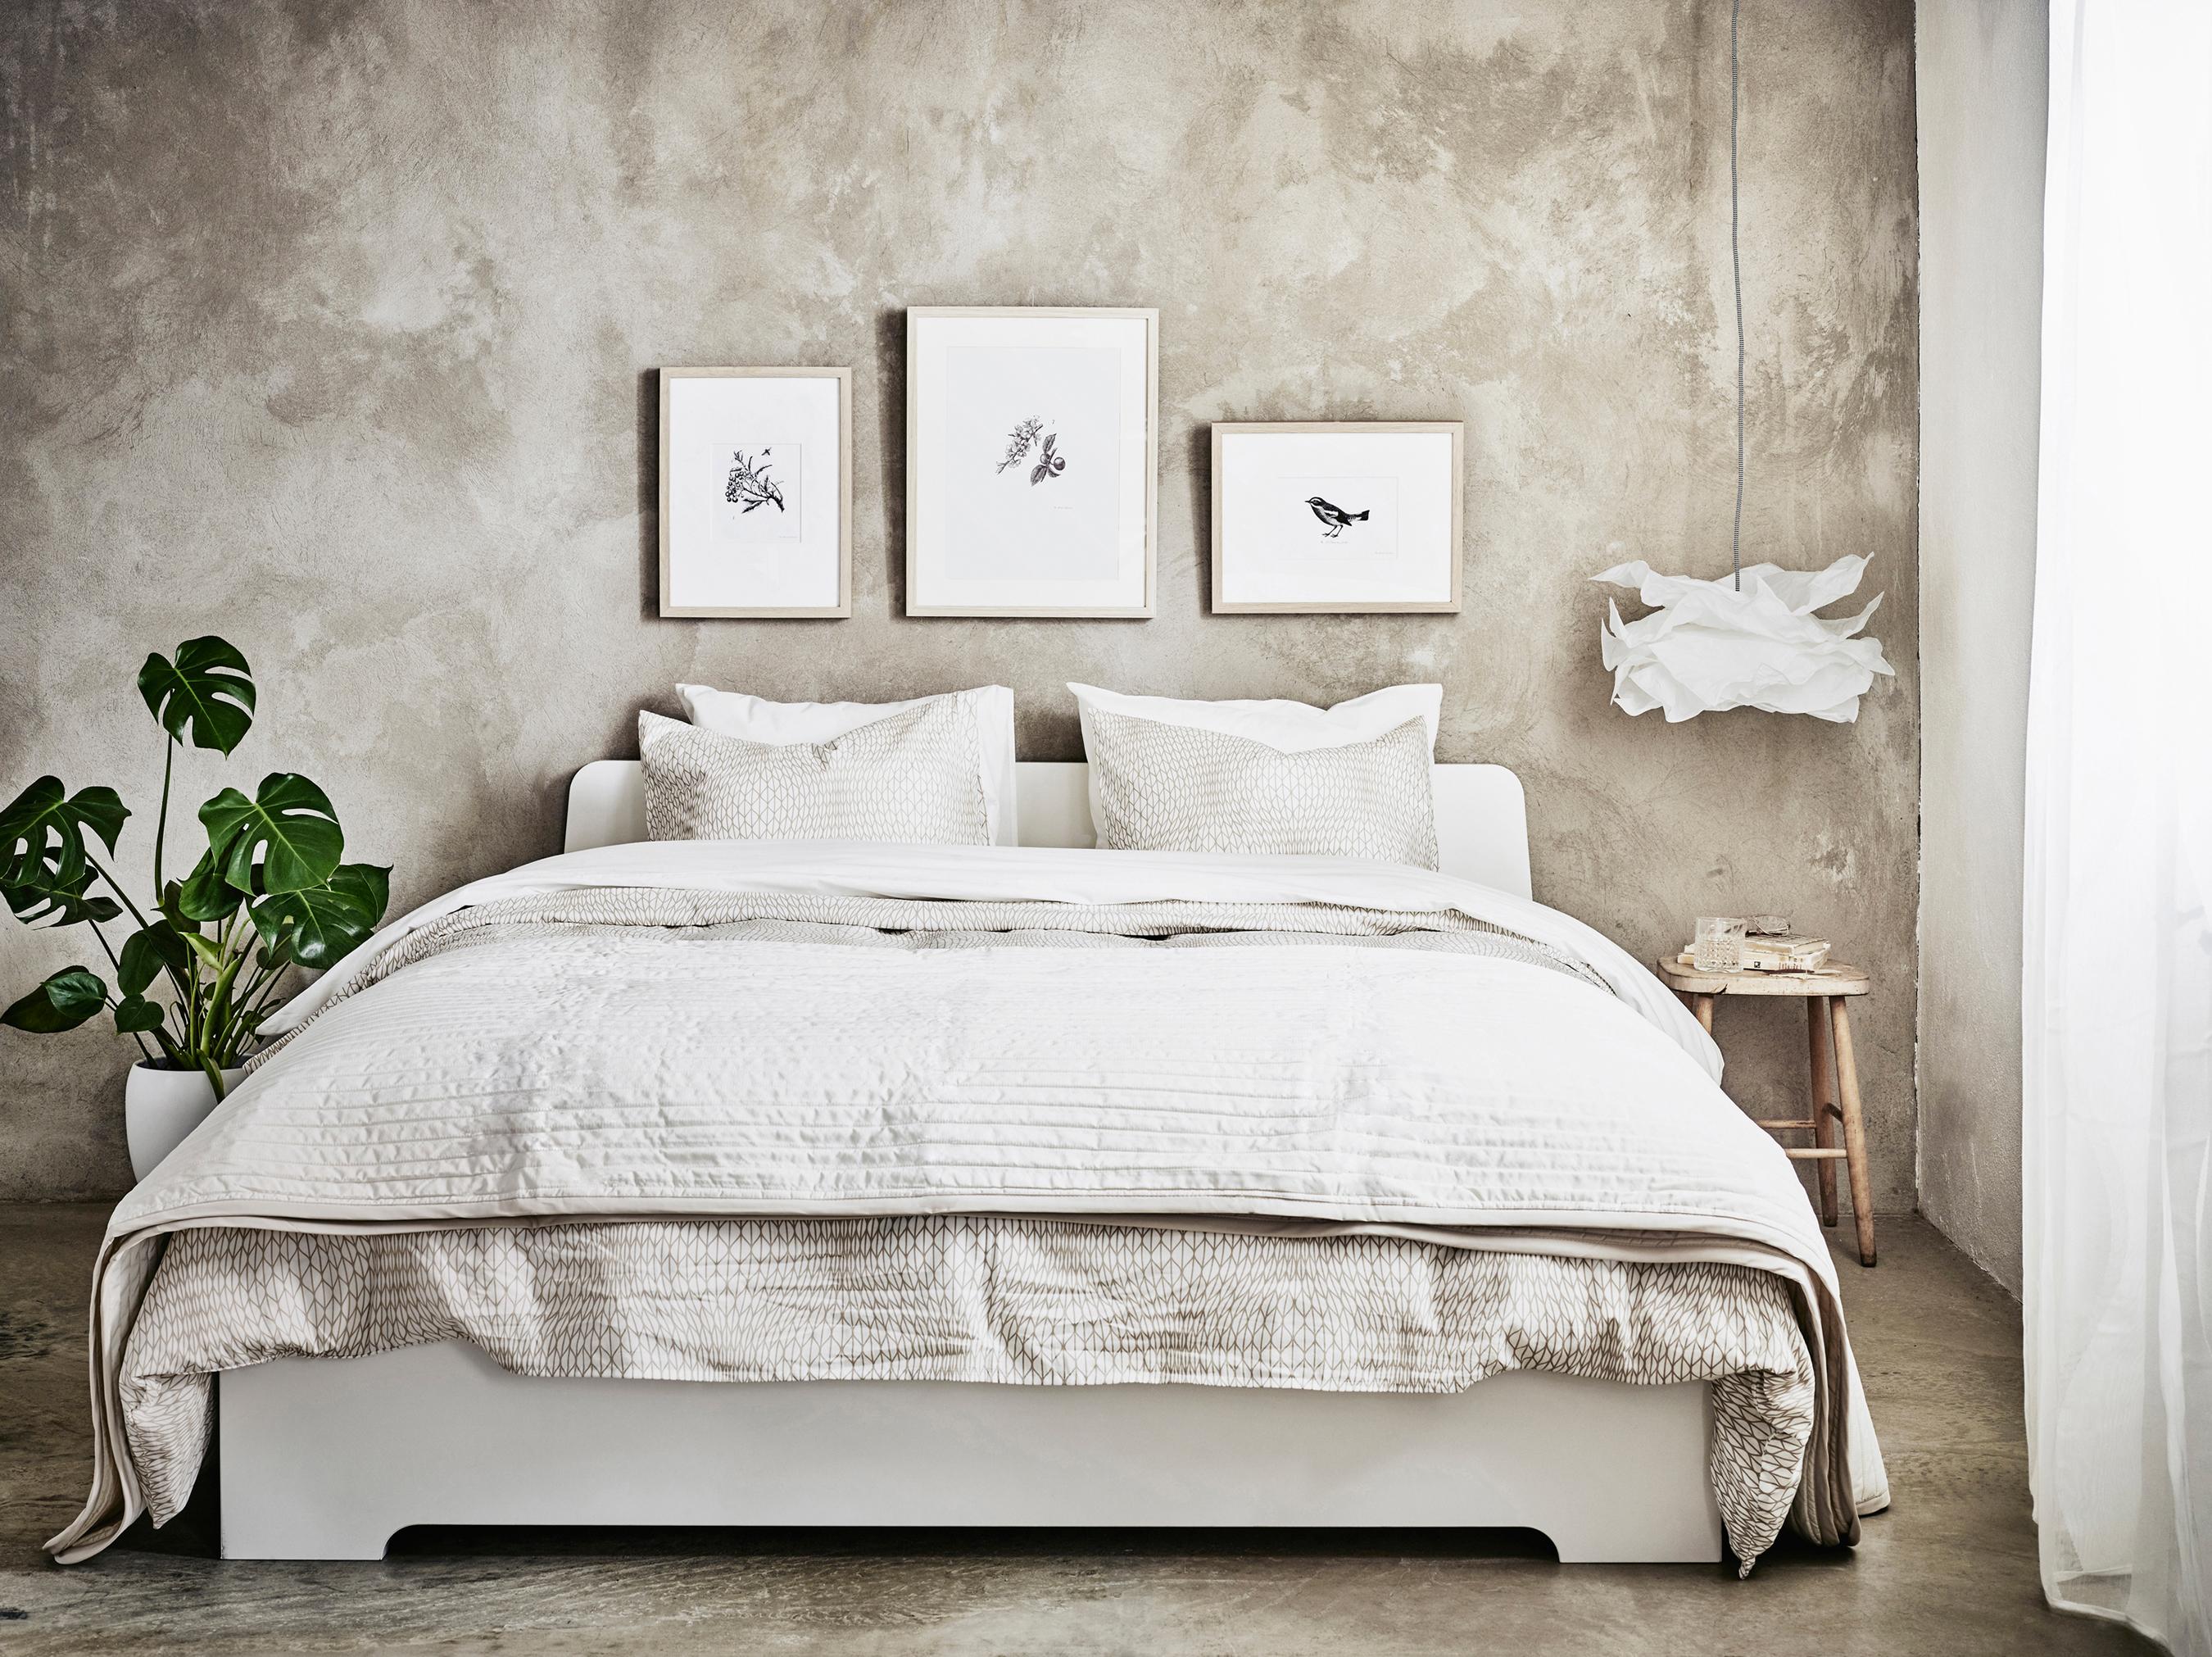 Doppelbett in Szene setzen #bilderrahmen #bettwäsche #wandgestaltung #ikea ©Inter IKEA Systems B.V.